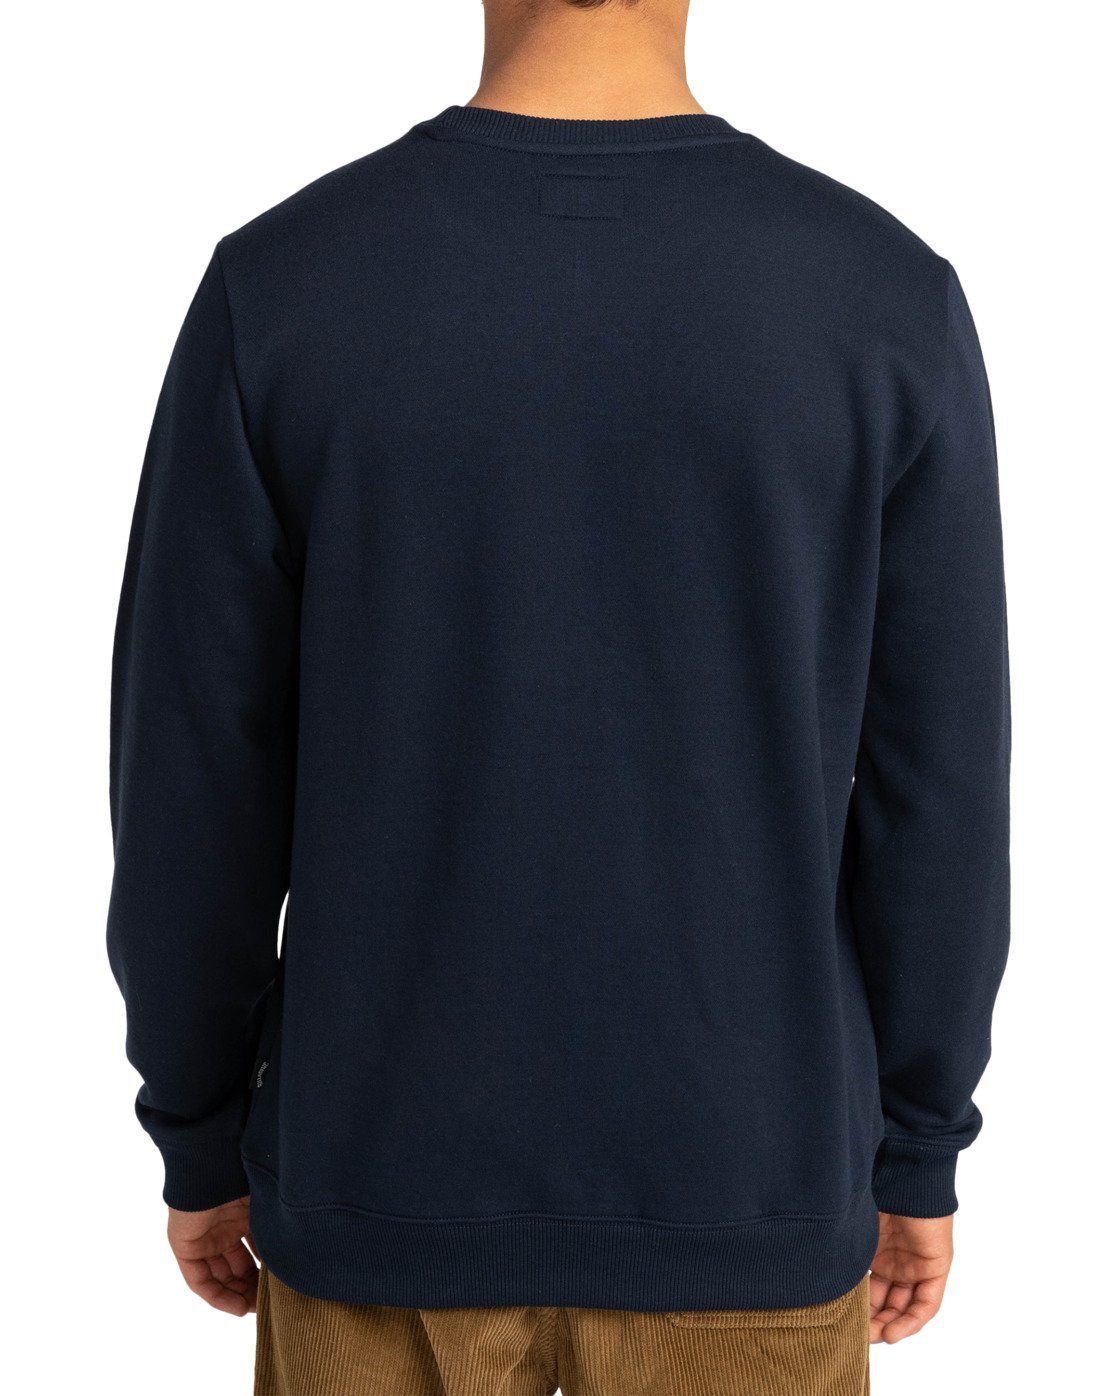 Billabong Navy Arch Sweatshirt